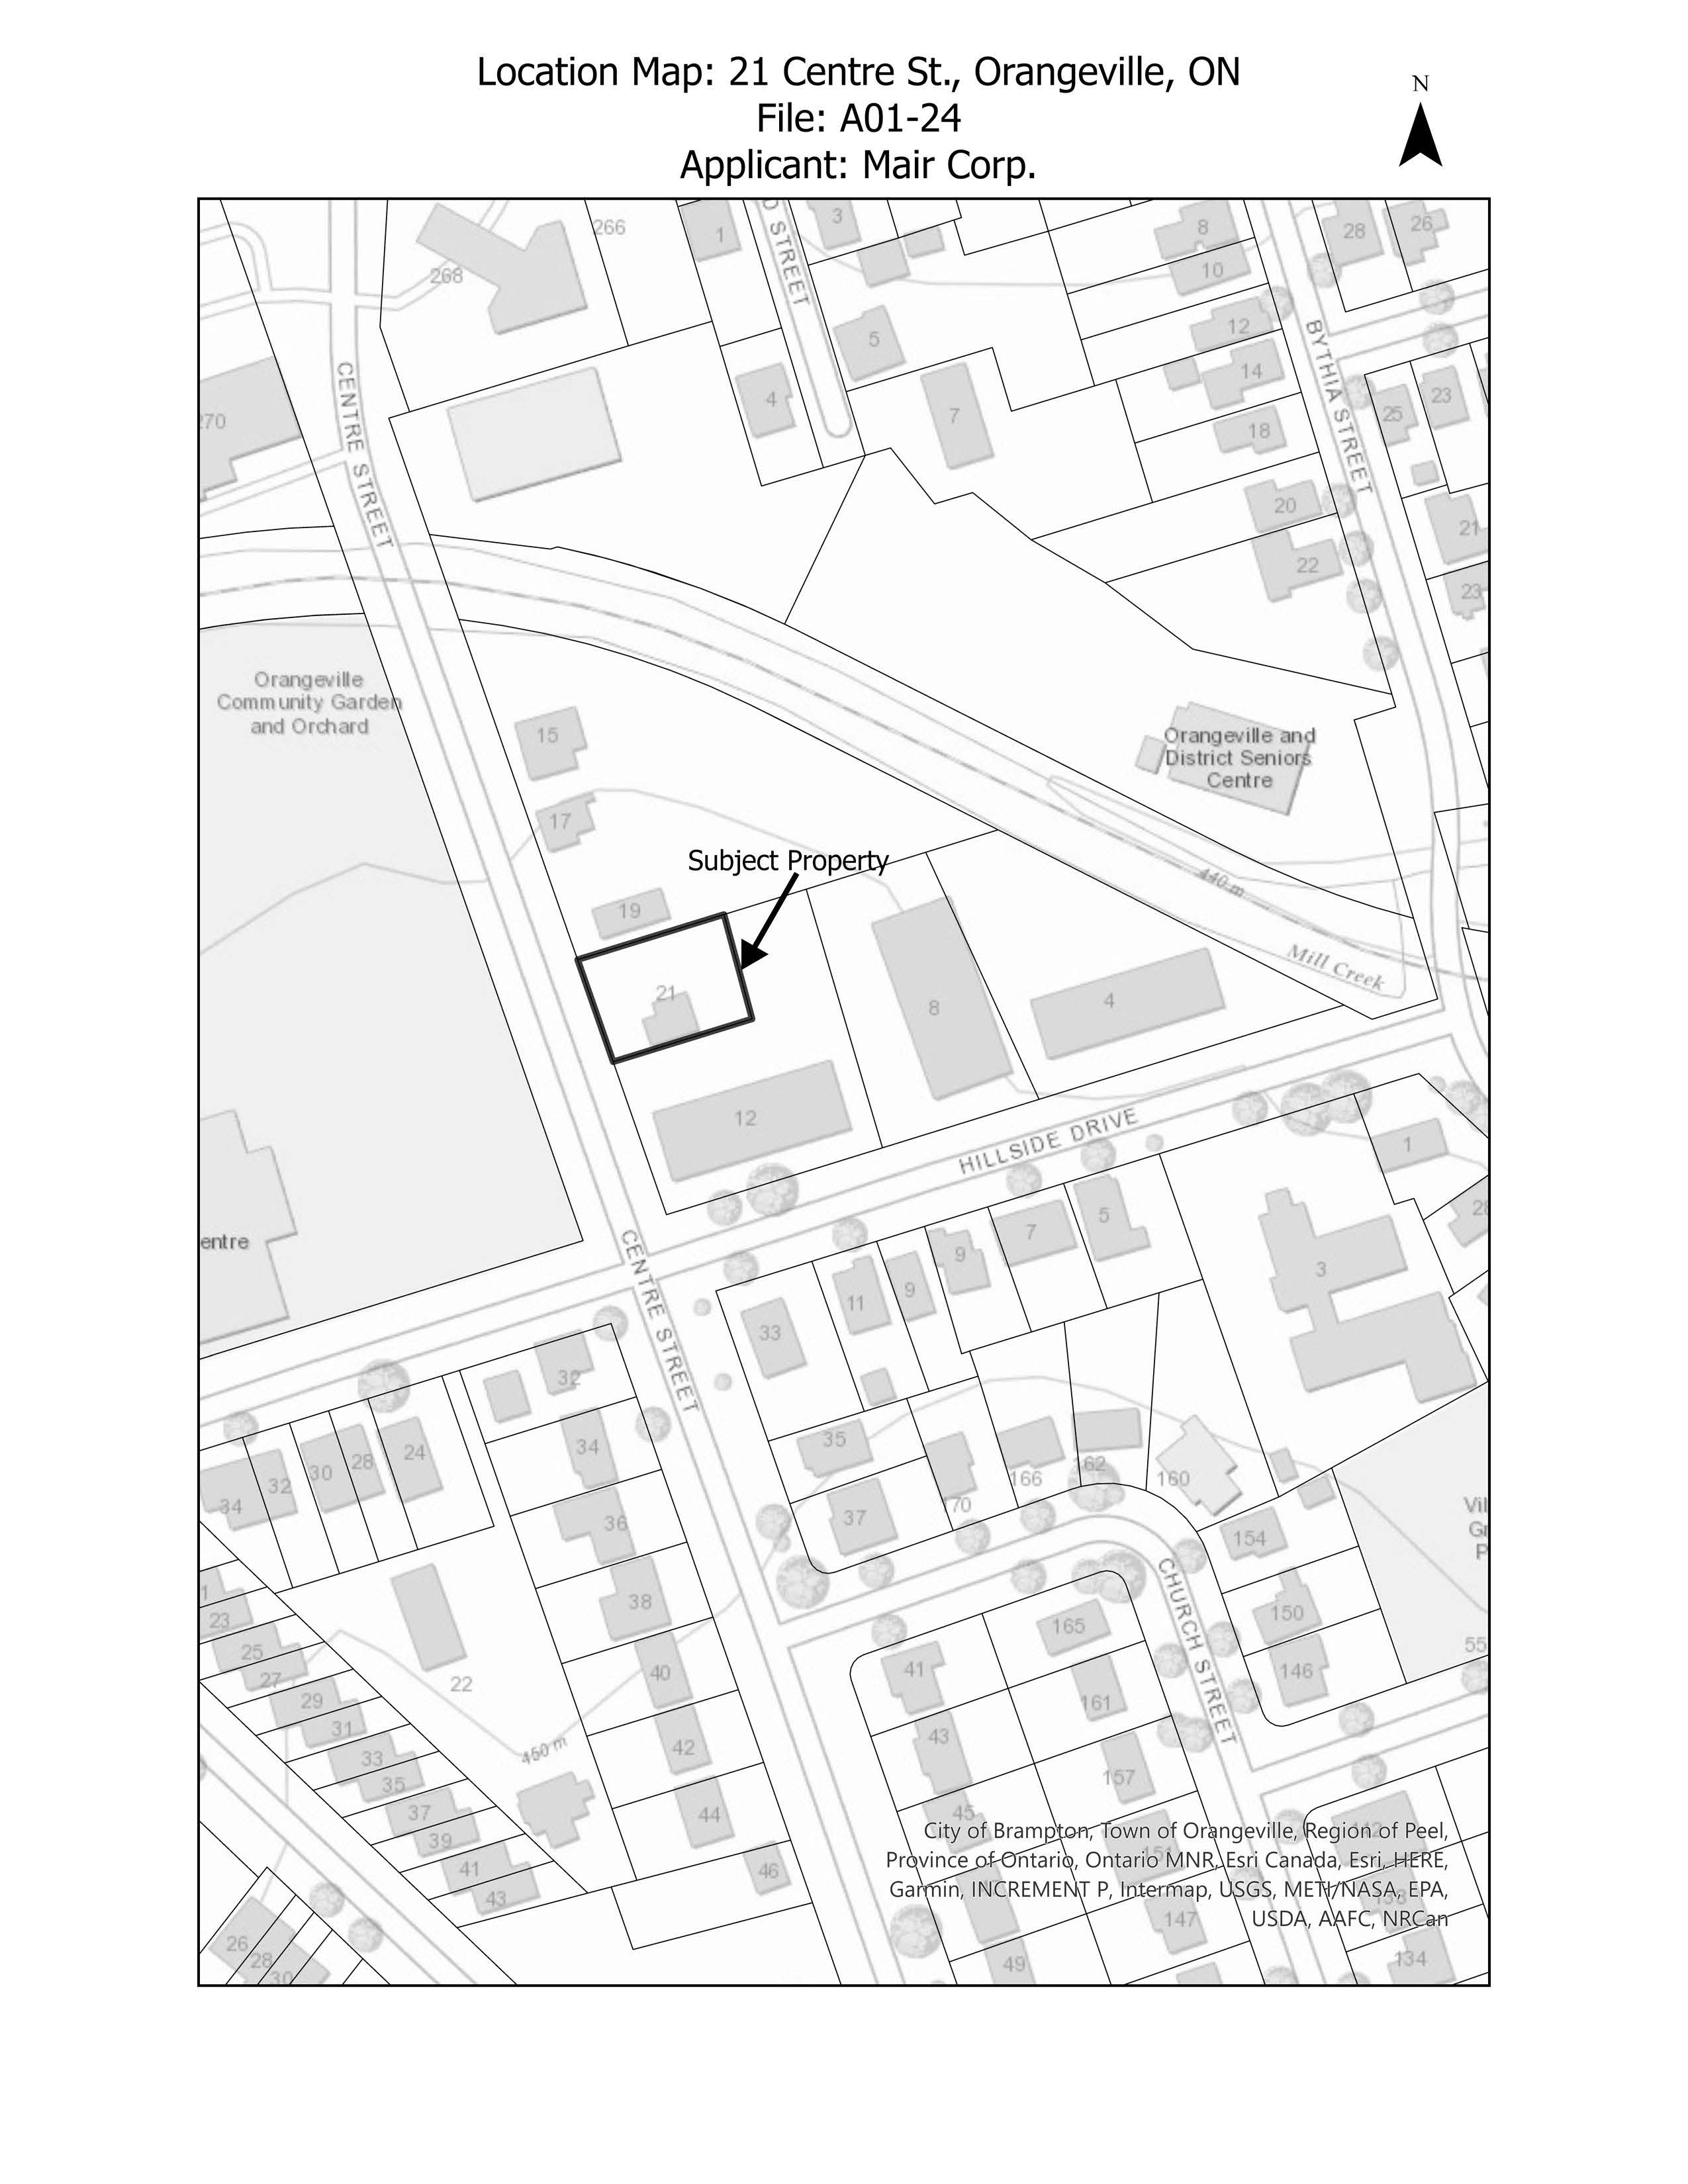 File No- A-0124_Location Map